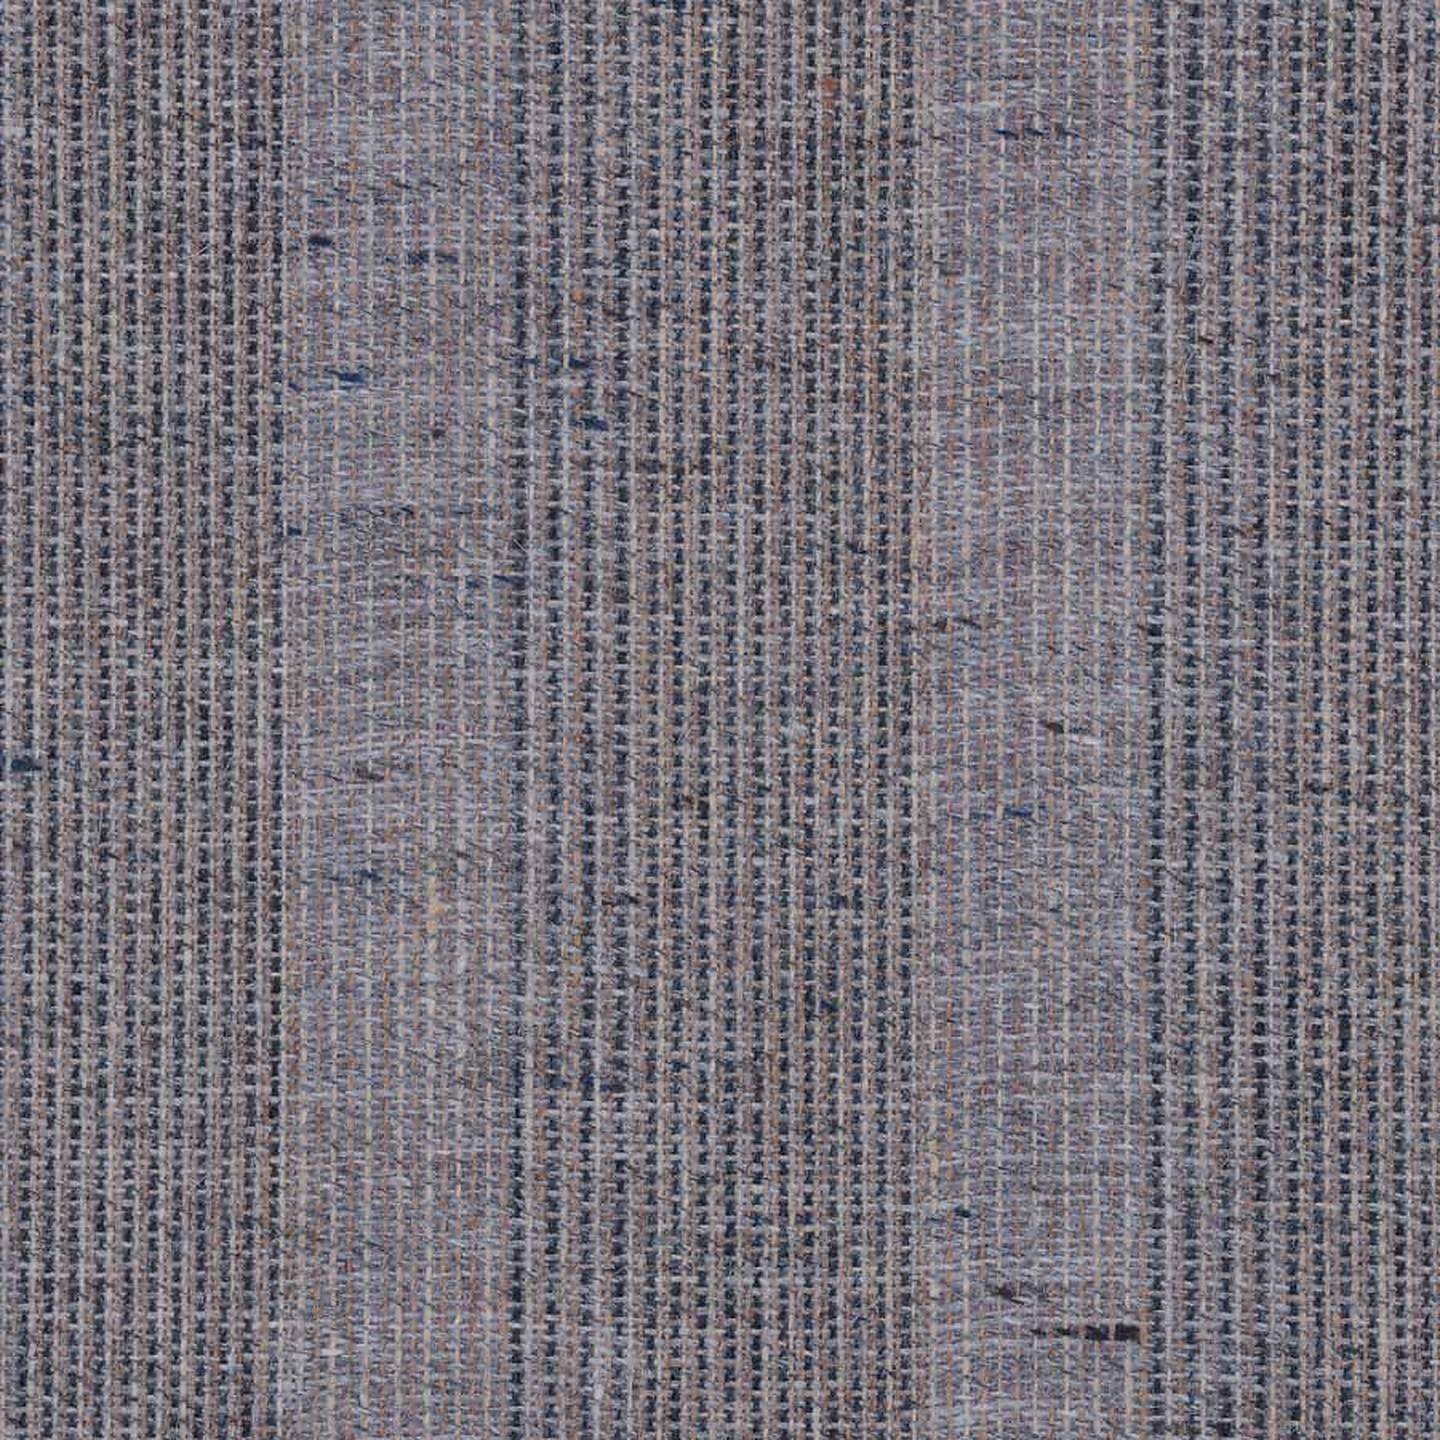 nomaad.eu-natural wallcovering,stripes,fabric texture